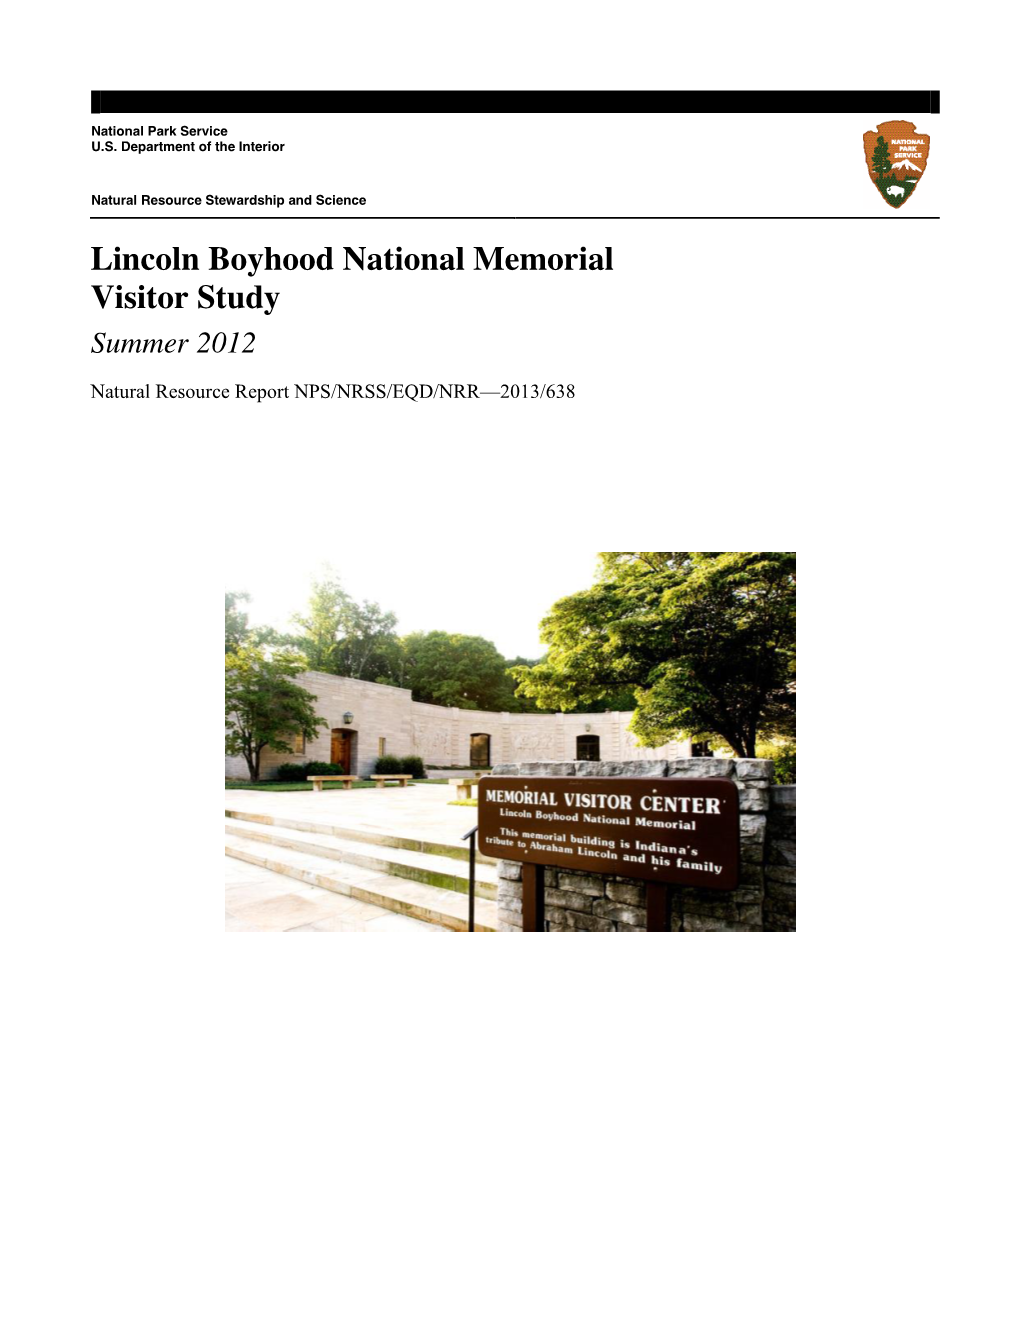 Lincoln Boyhood National Memorial Visitor Study Summer 2012